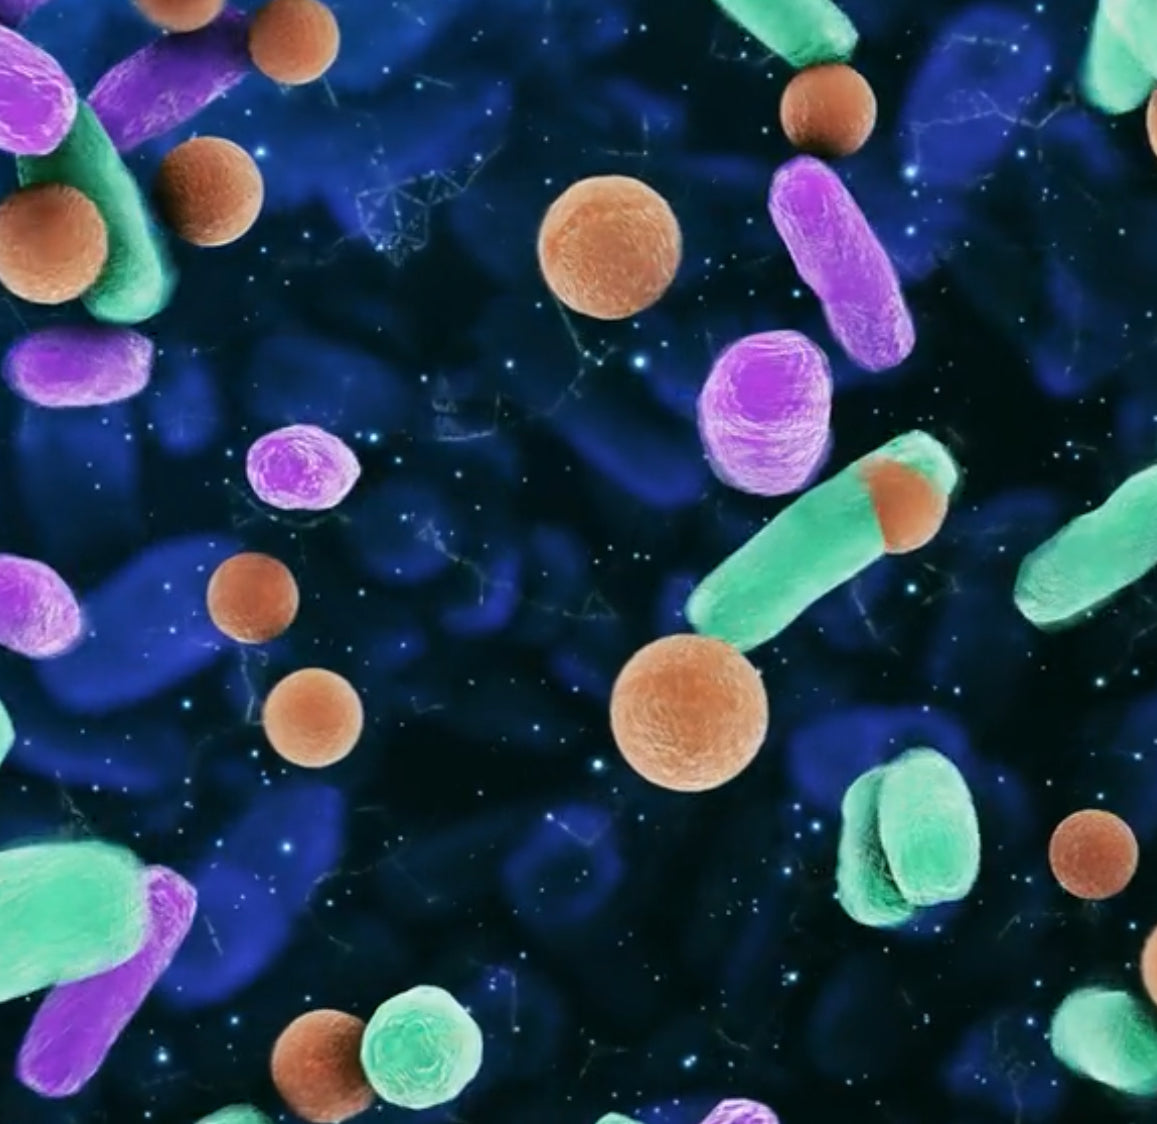 < 100 Billion live bacteria per capsule